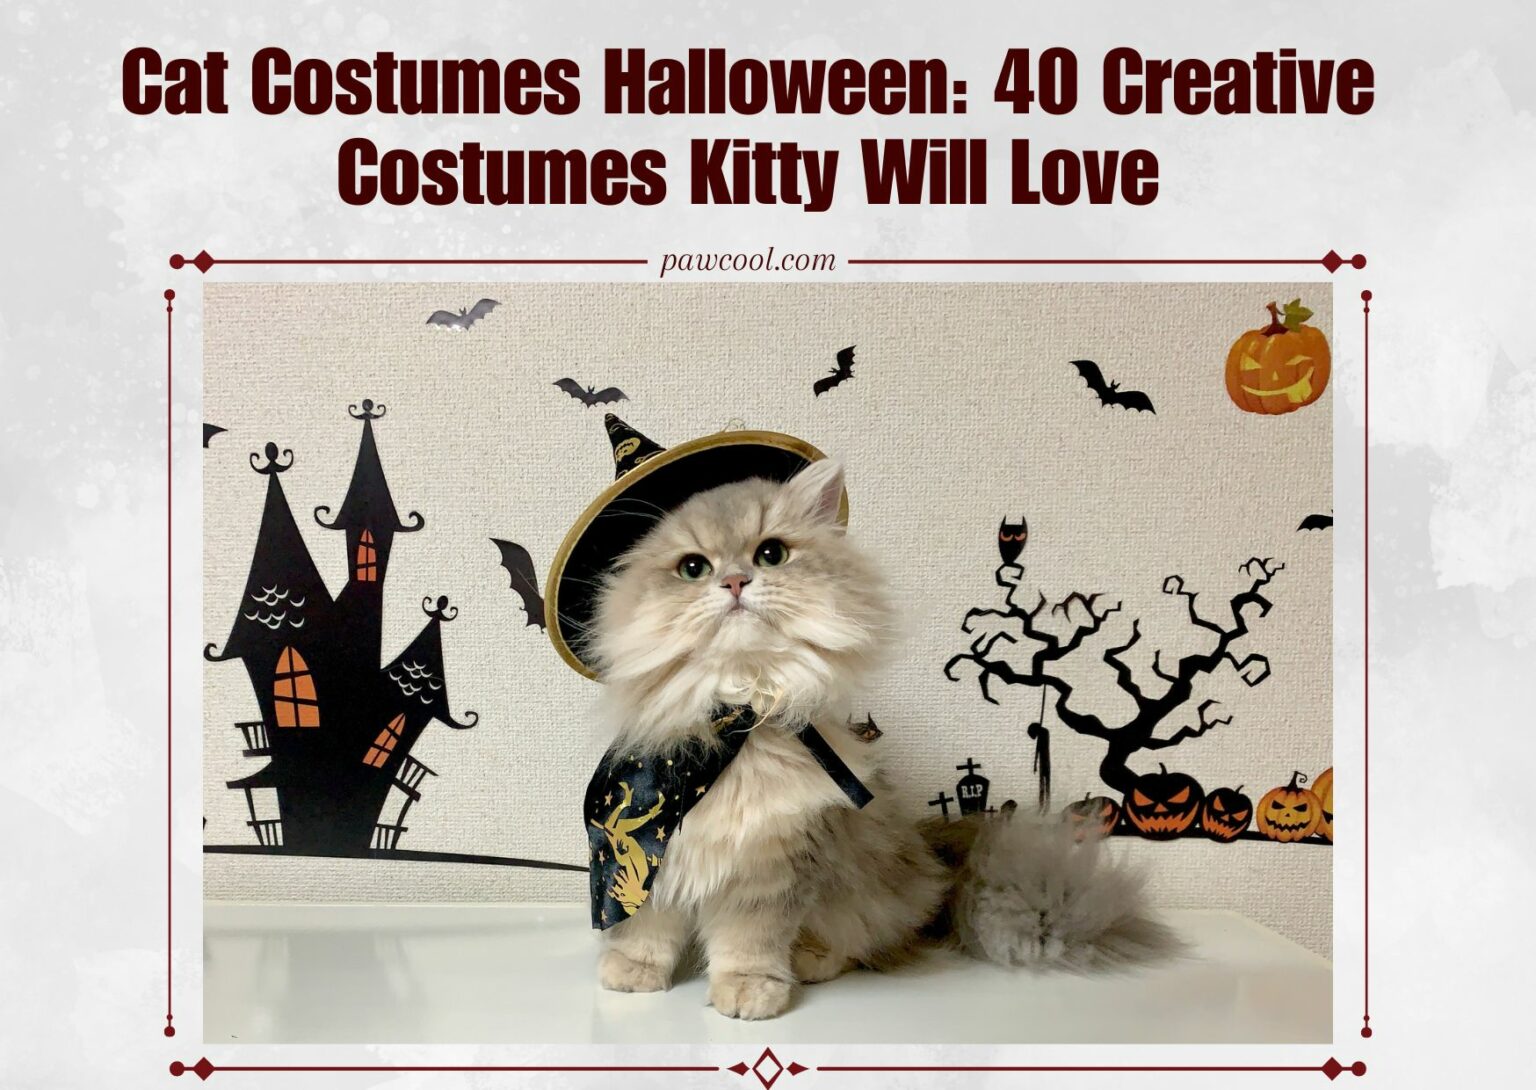 Cat Costumes Halloween: 40 Creative Costumes Kitty Will Love